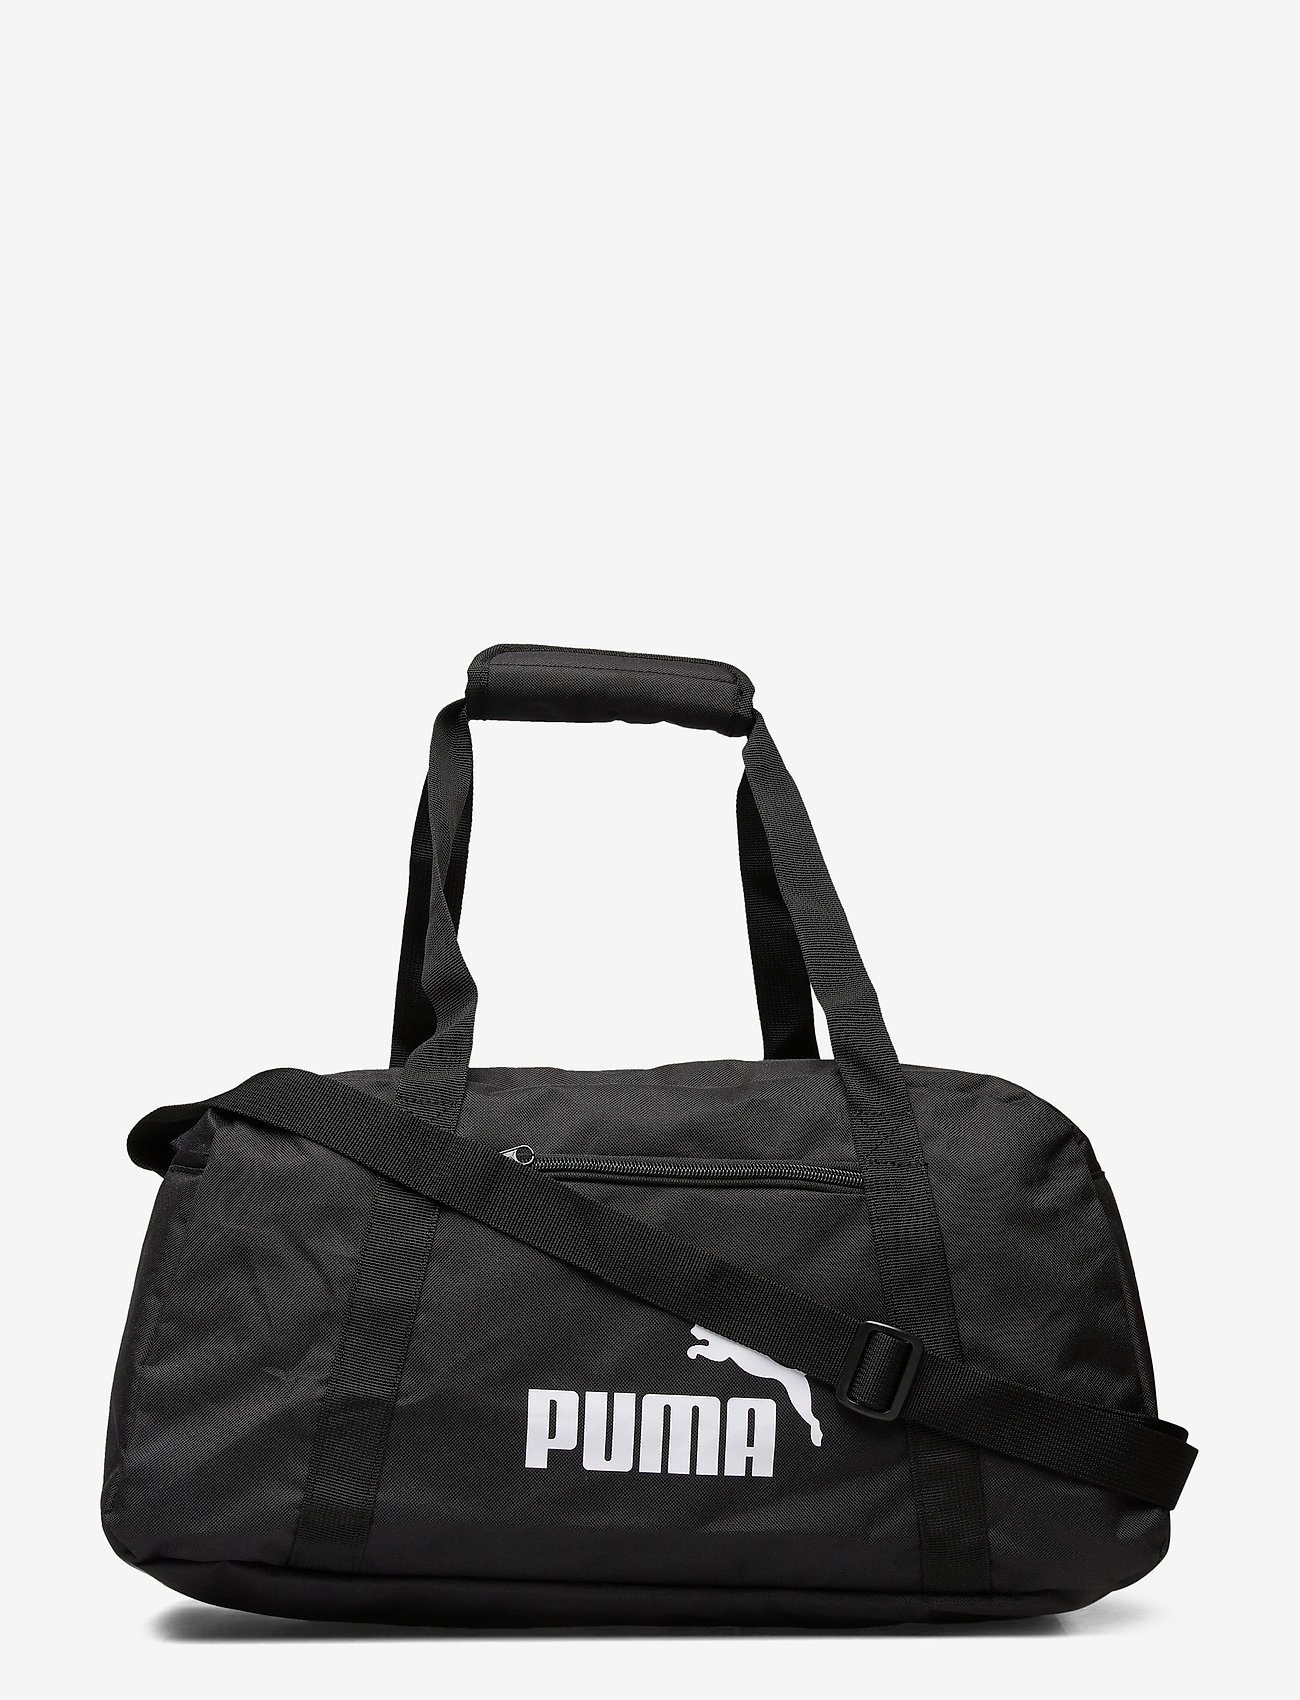 Puma Phase Sports Bag (Puma Black) (18 